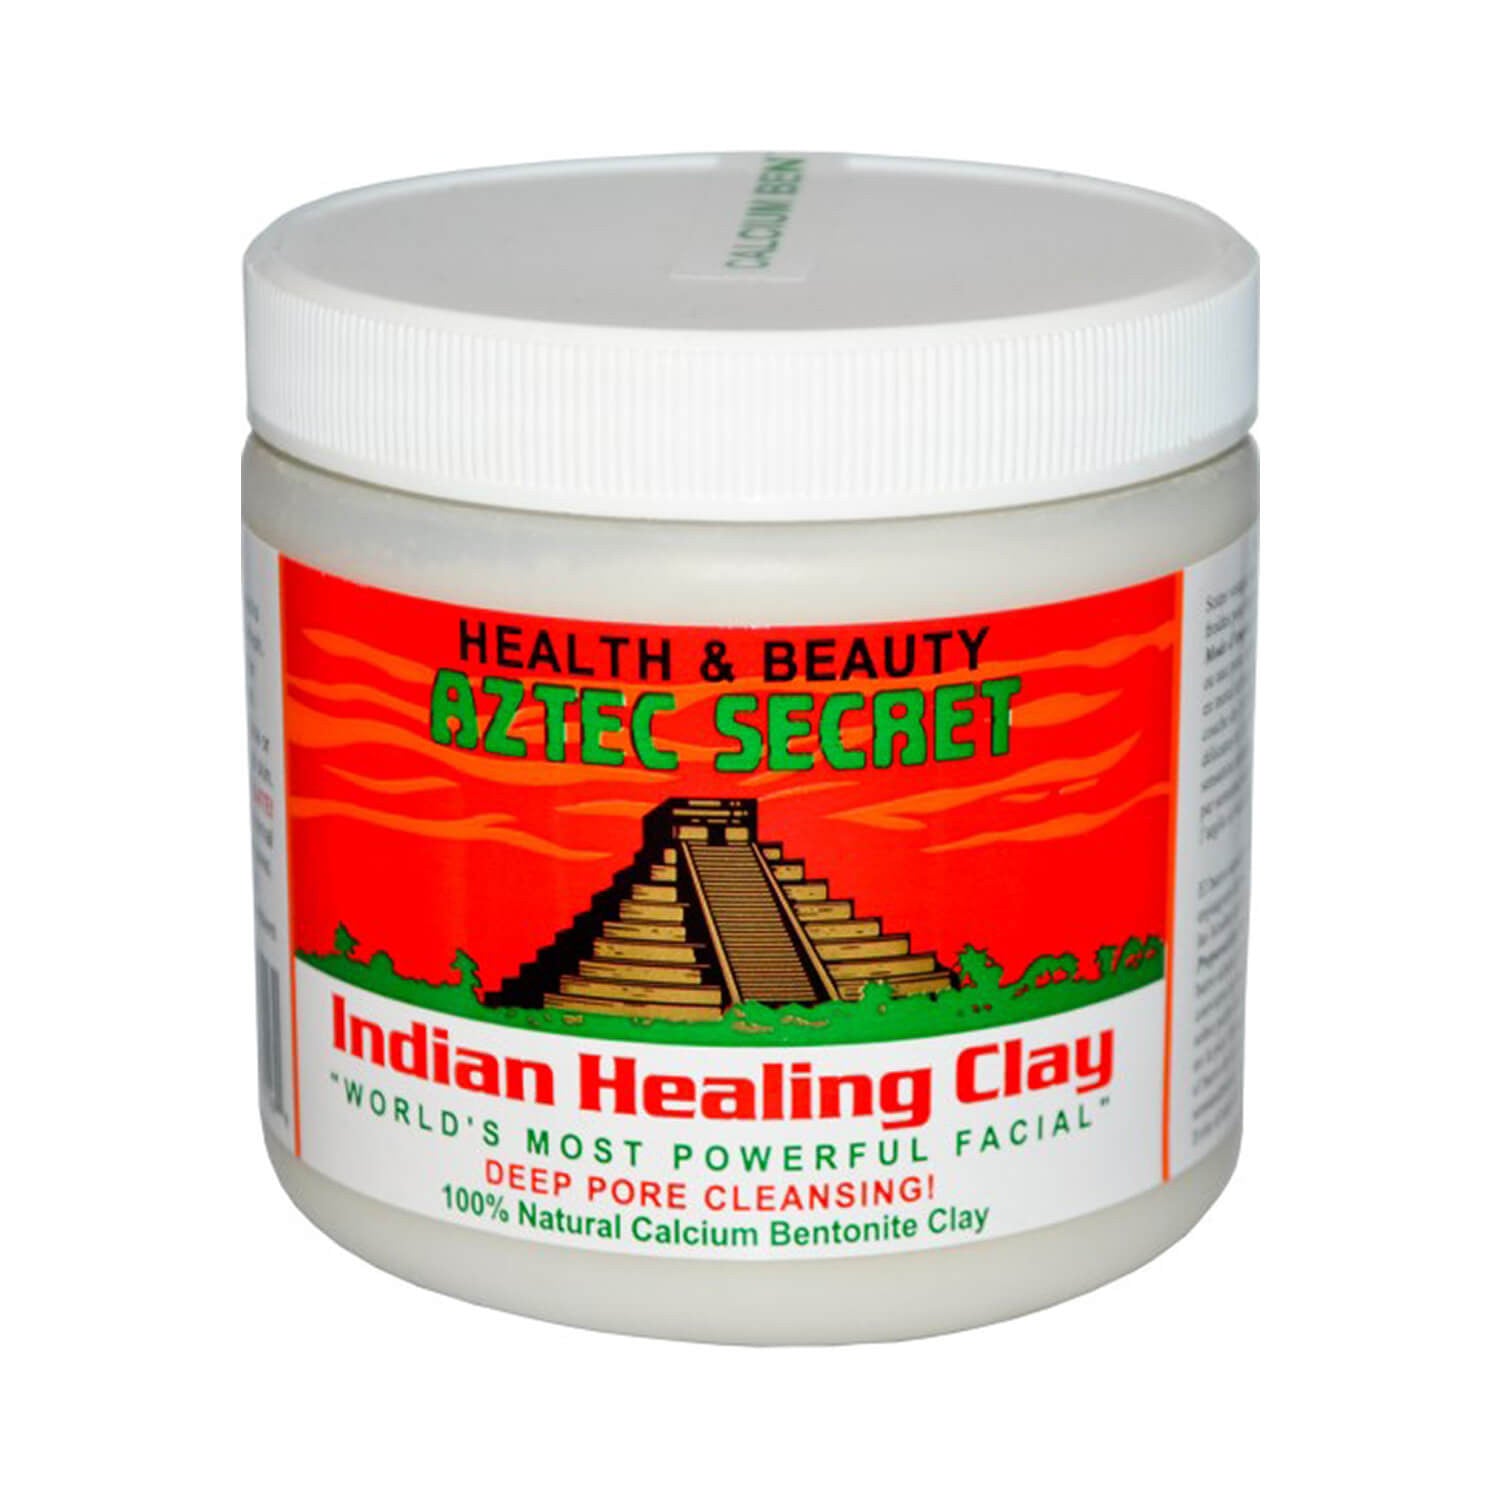 Aztec Secret Indian Healing Clay Deep Pore Cleansing 1lb 454g